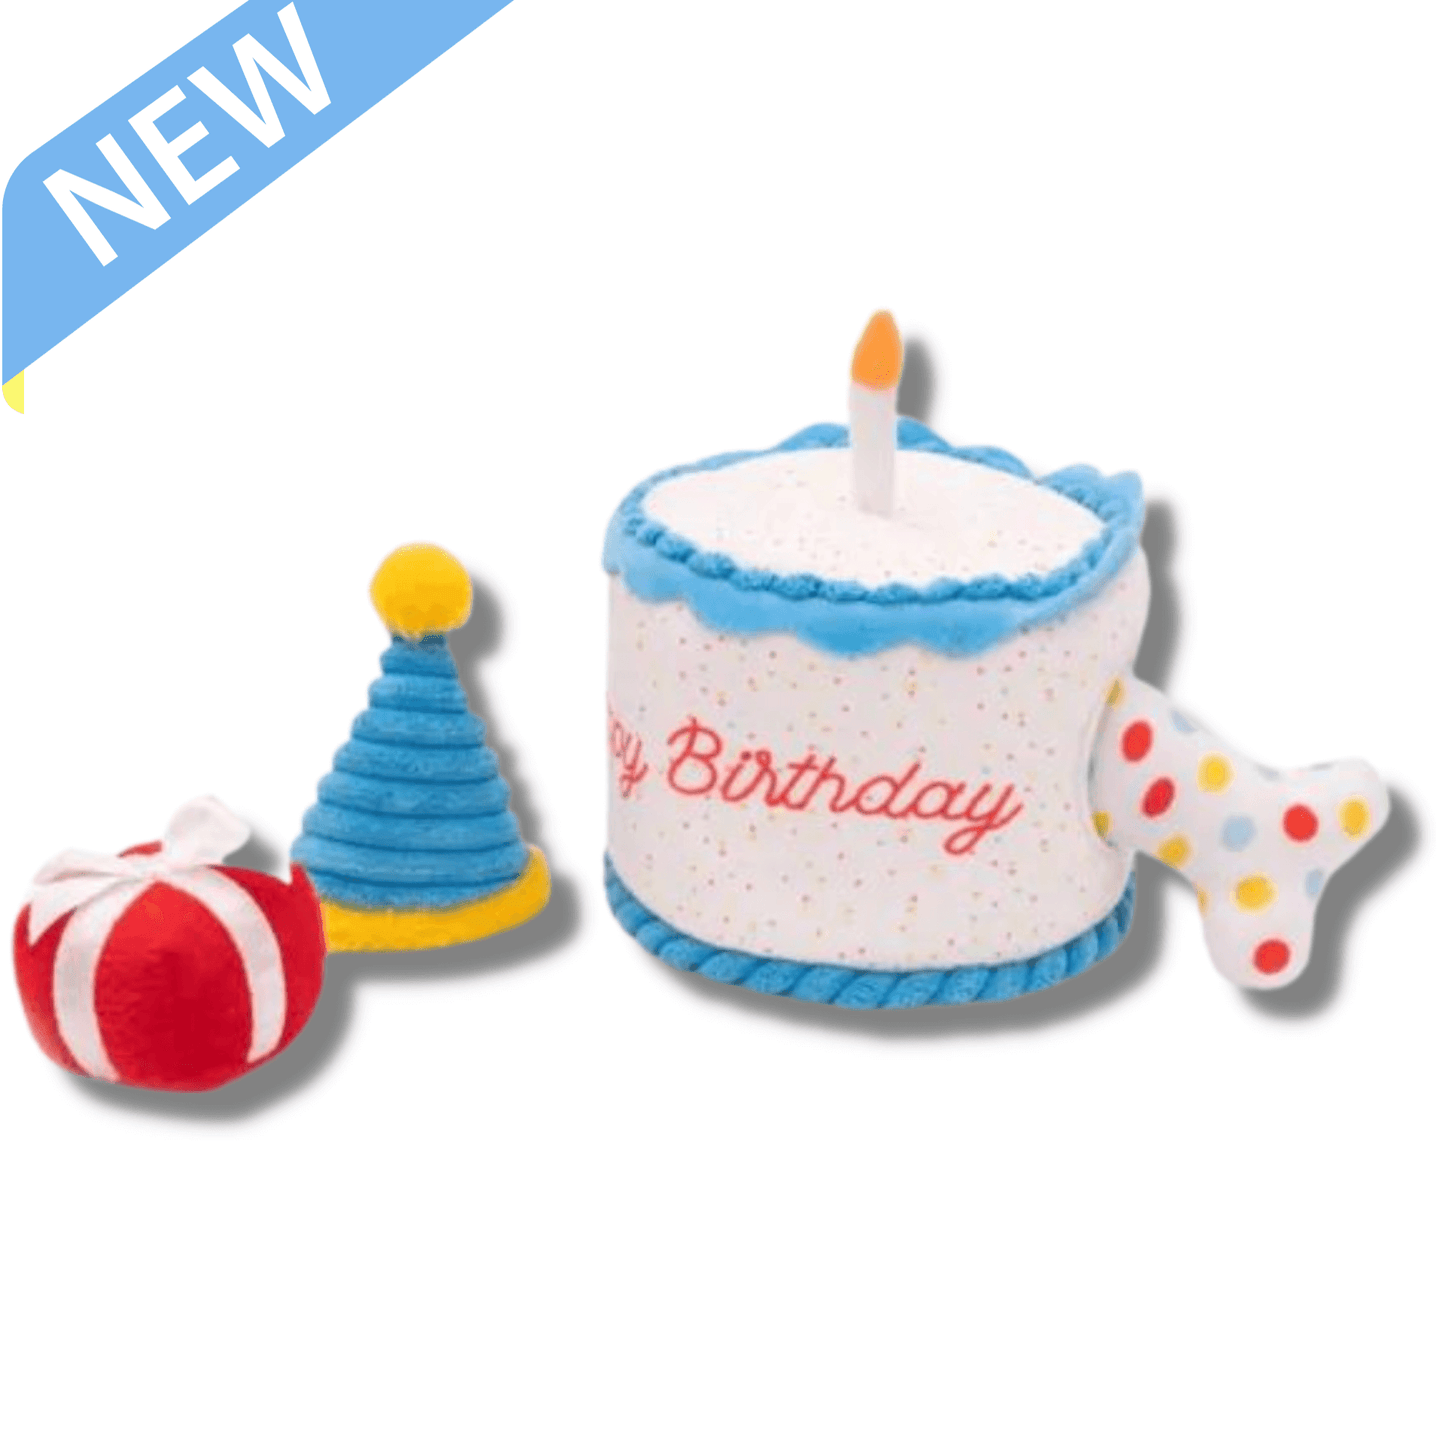 Happy birthday burrow, cake, hat and bone dog toy